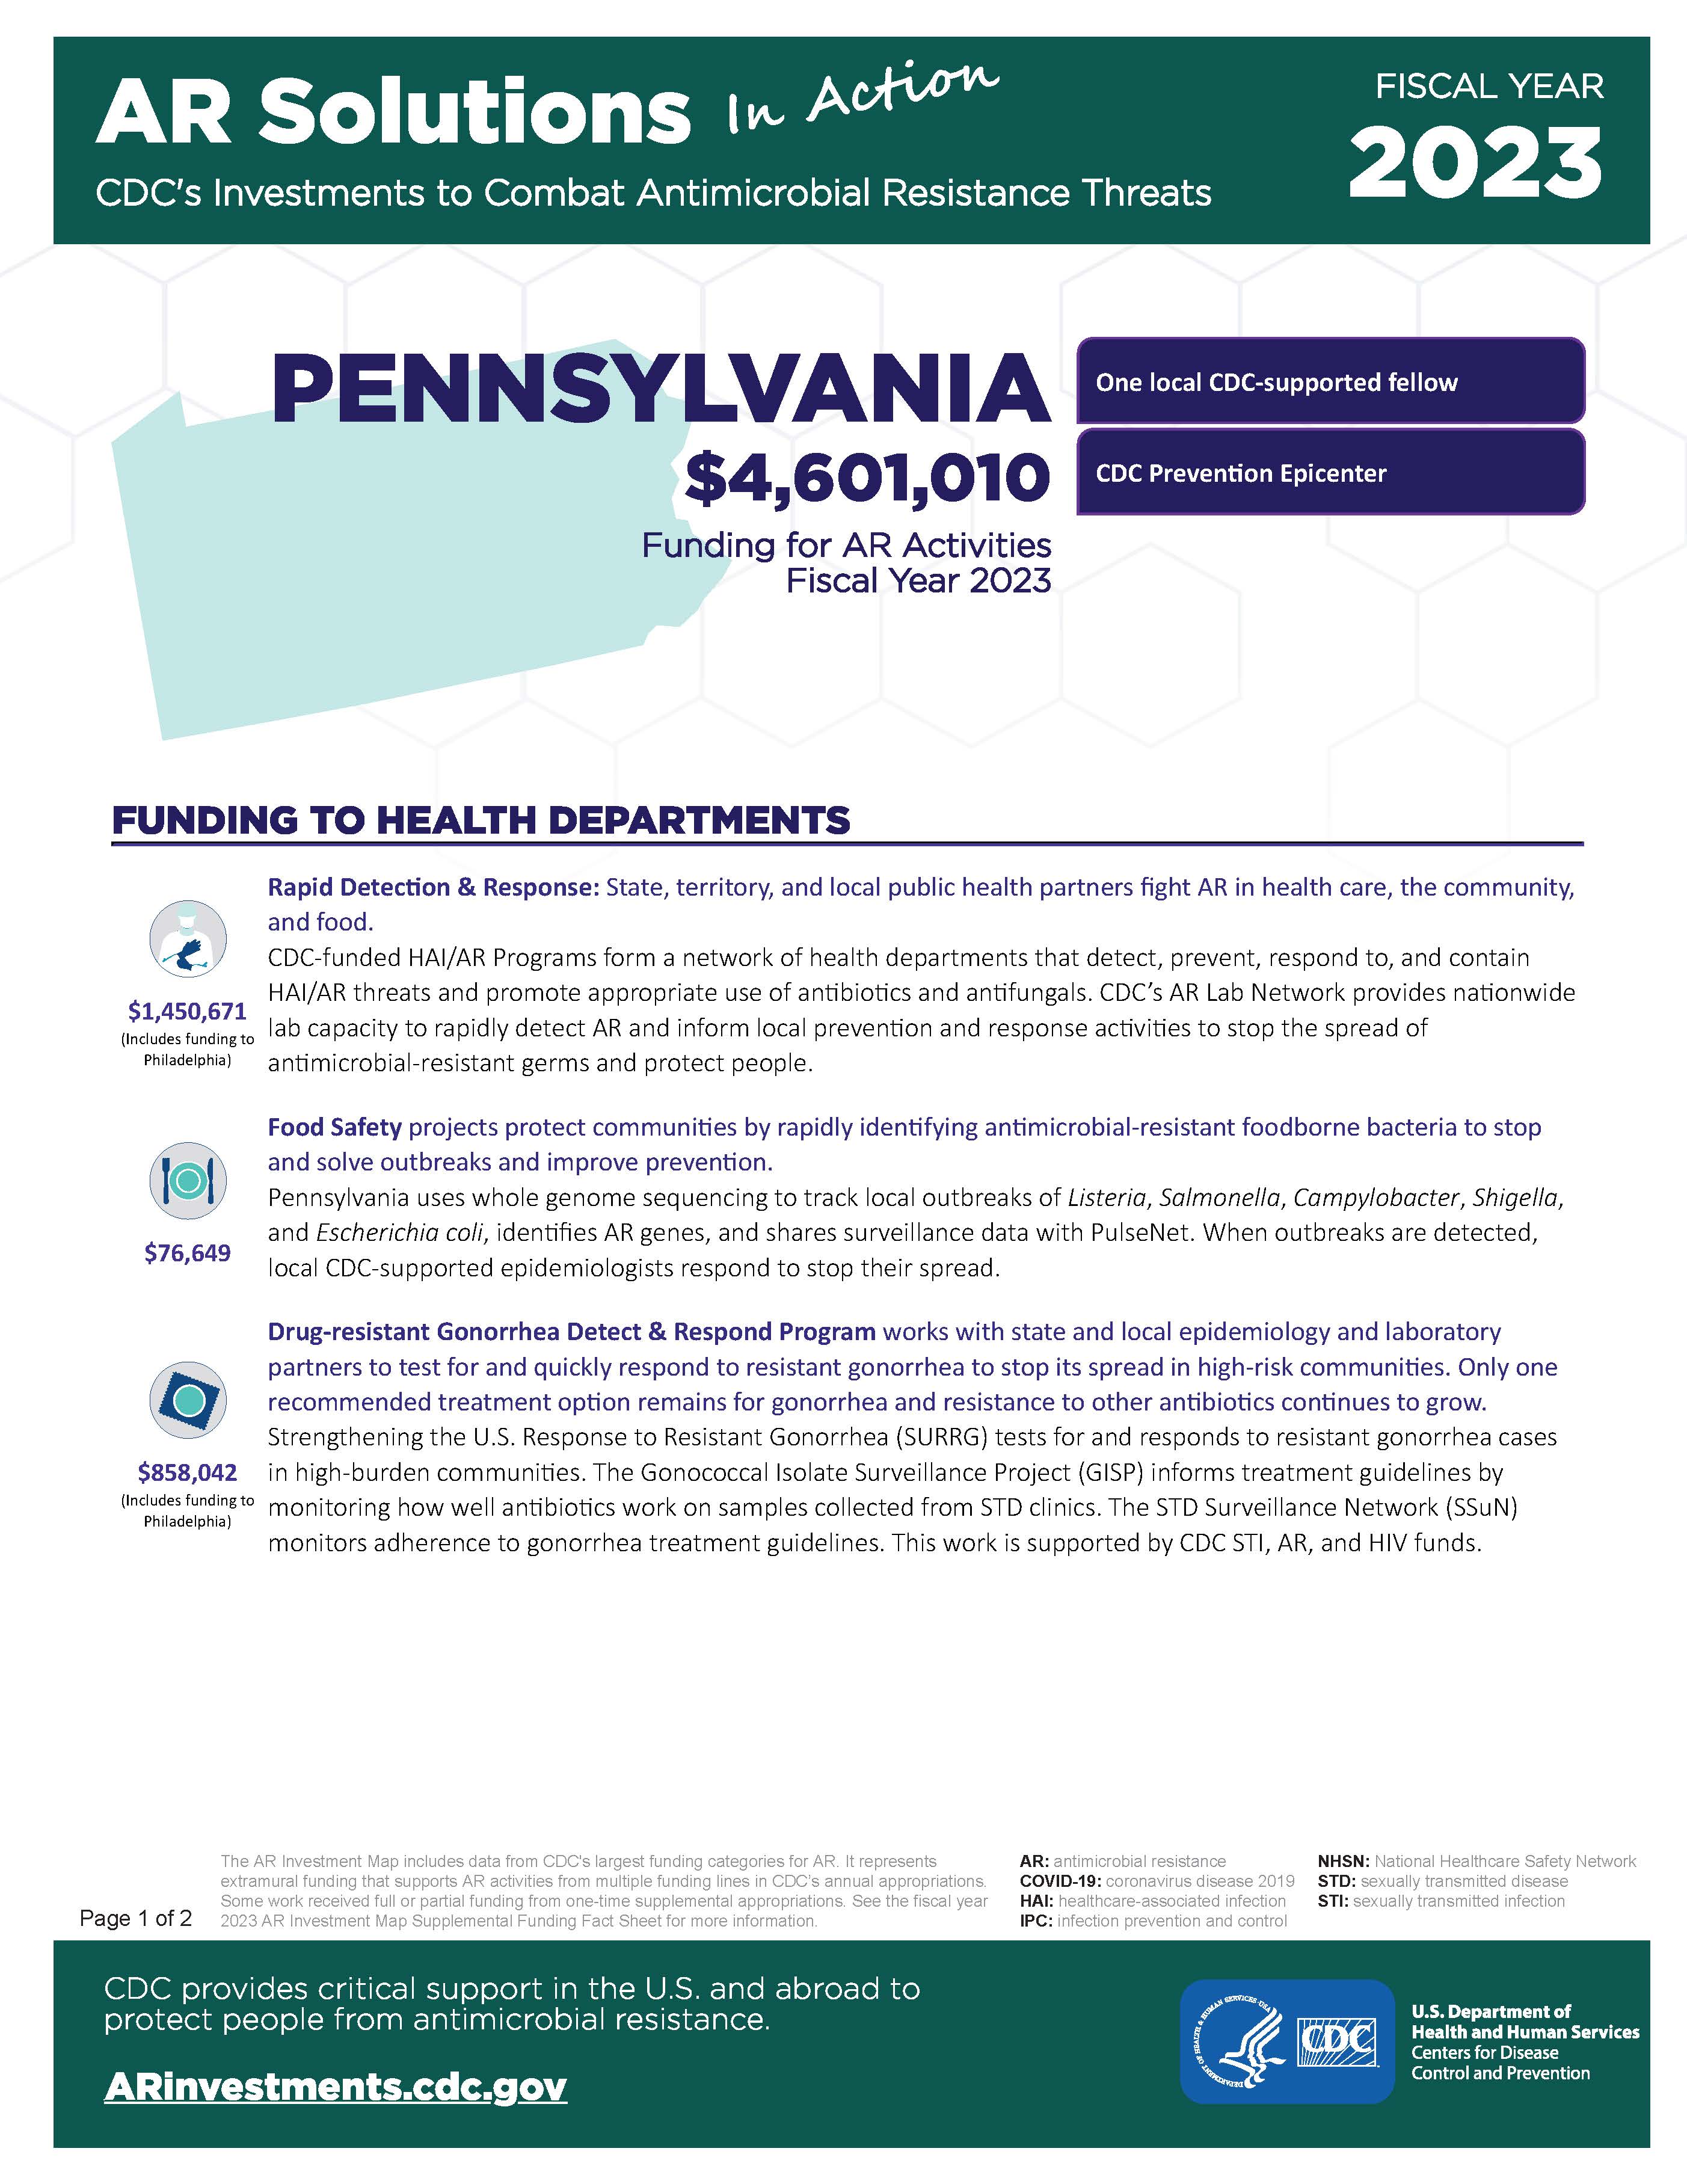 View Factsheet for Pennsylvania